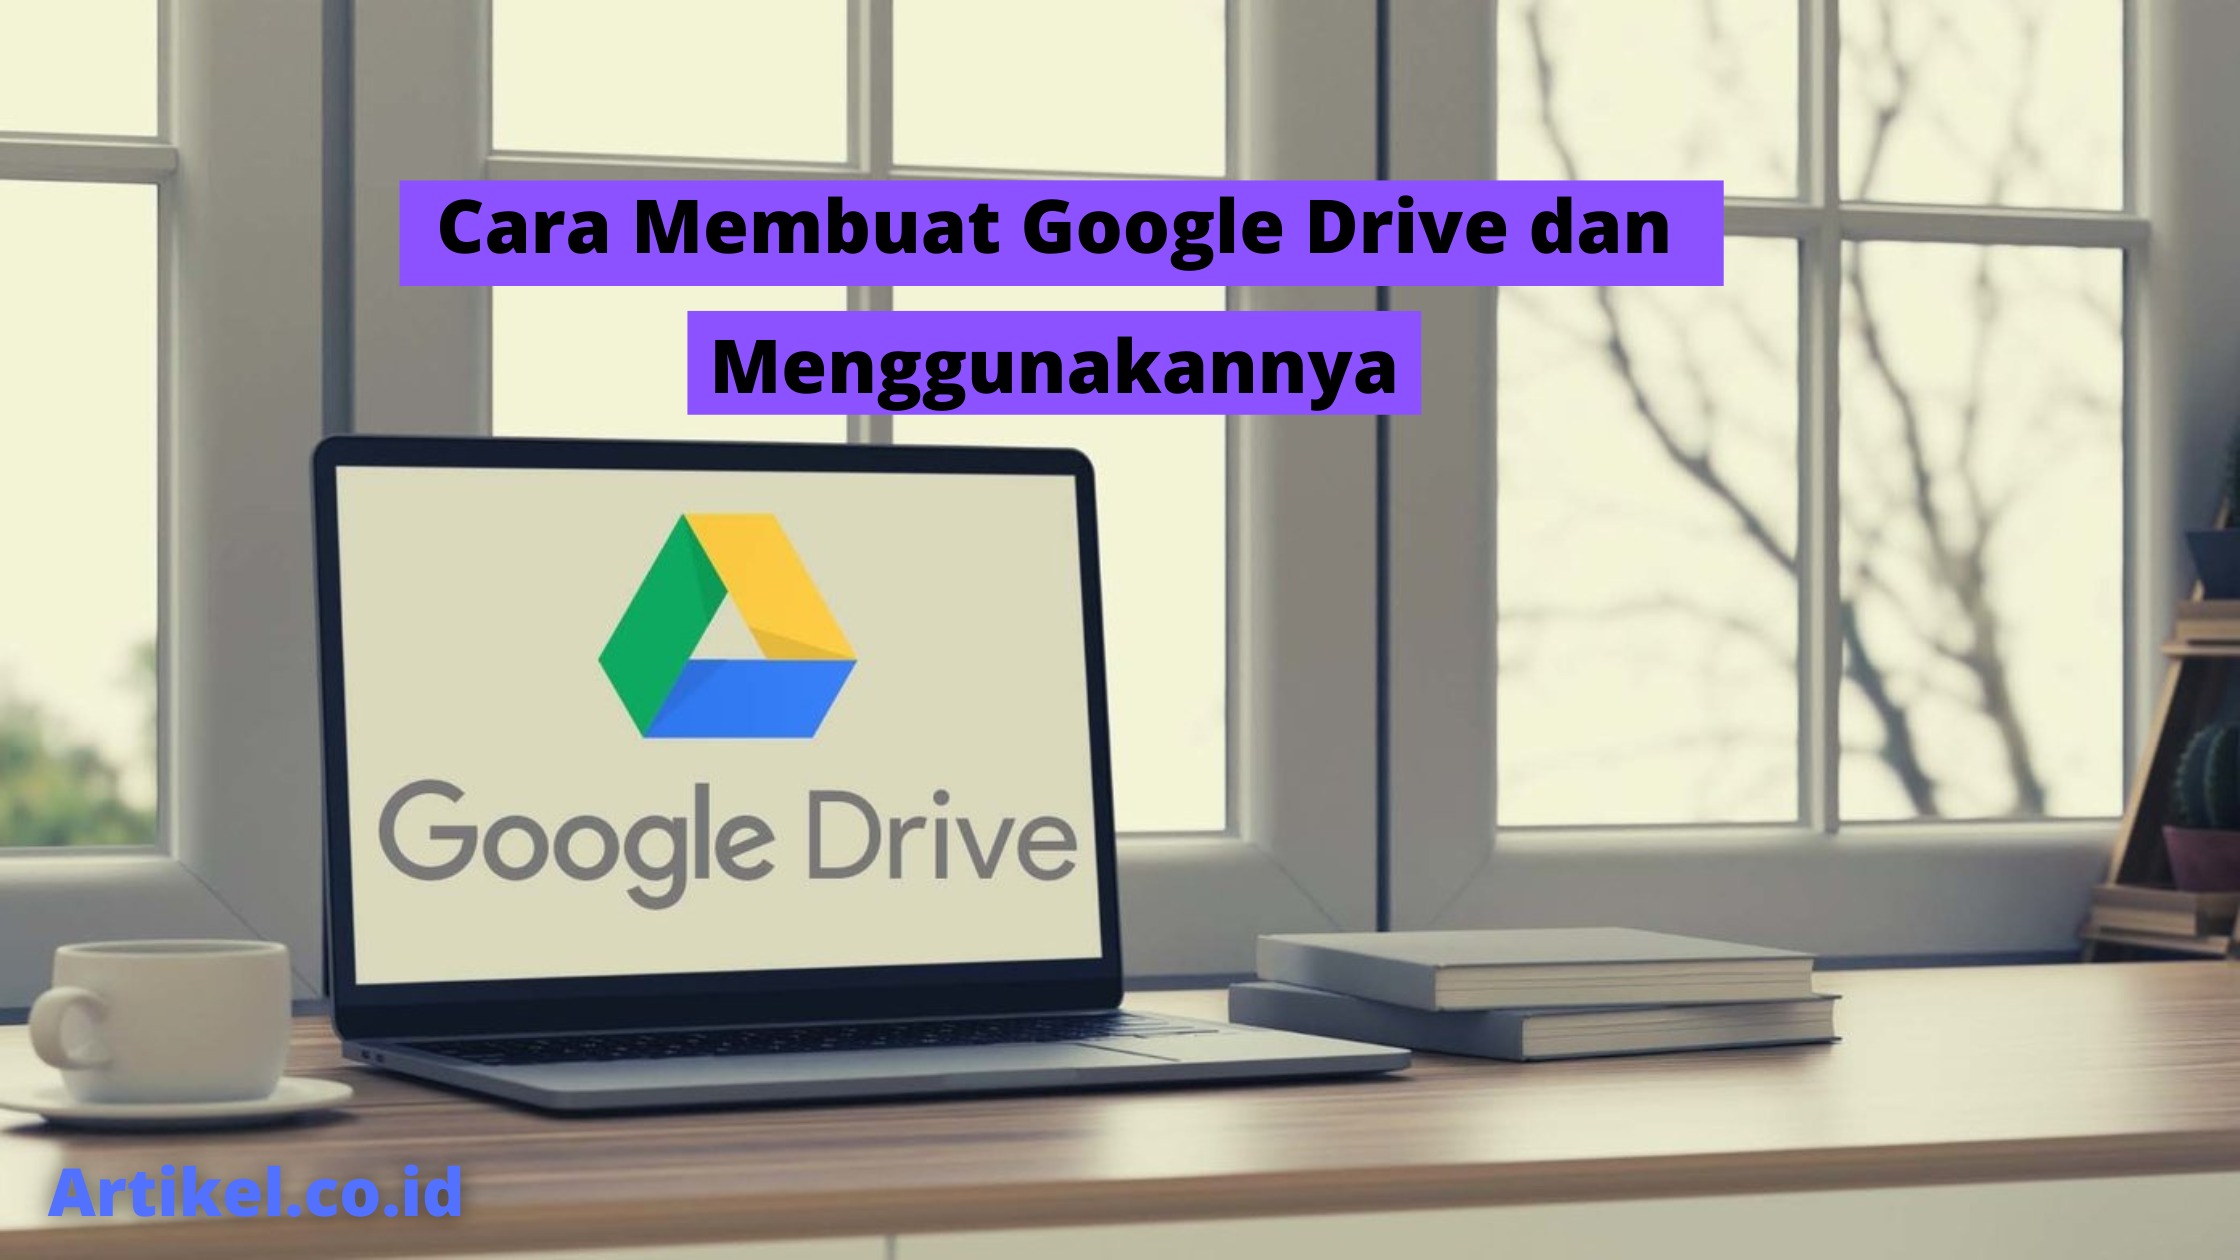 Cara Membuat Google Drive dan Menggunakannya